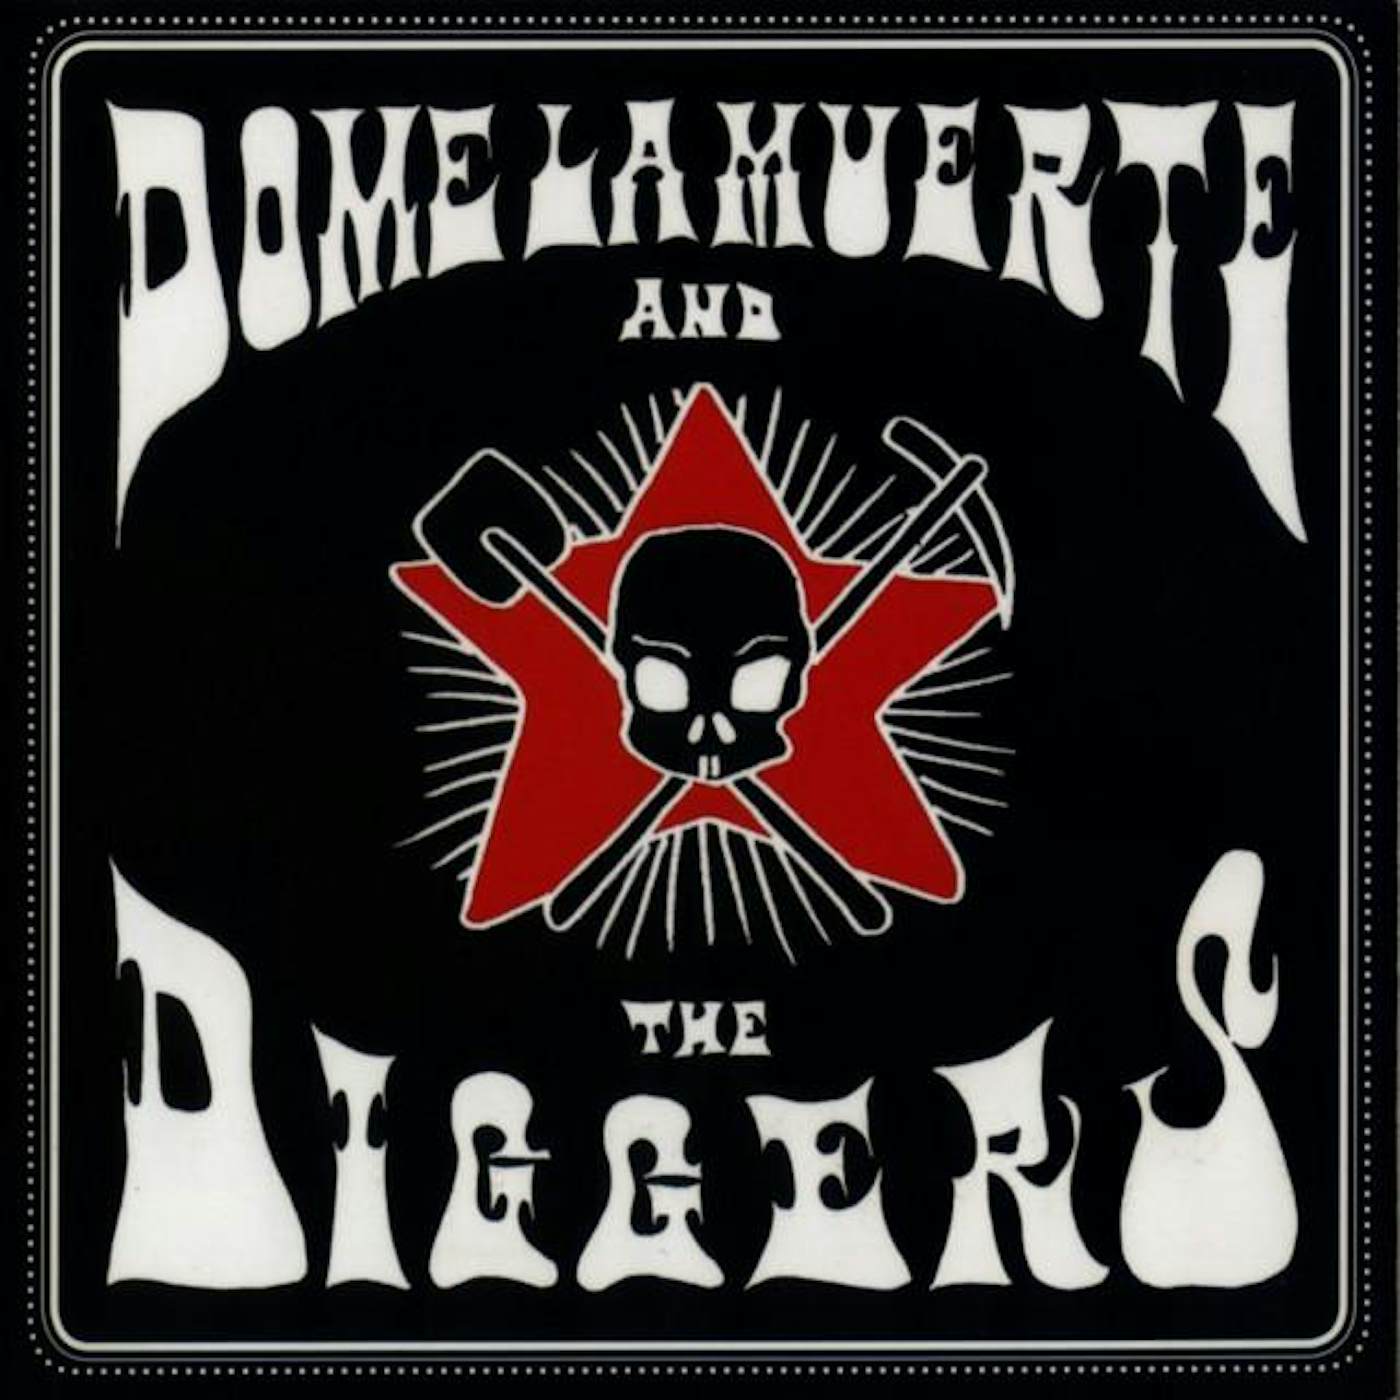 Dome La Muerte & The Diggers